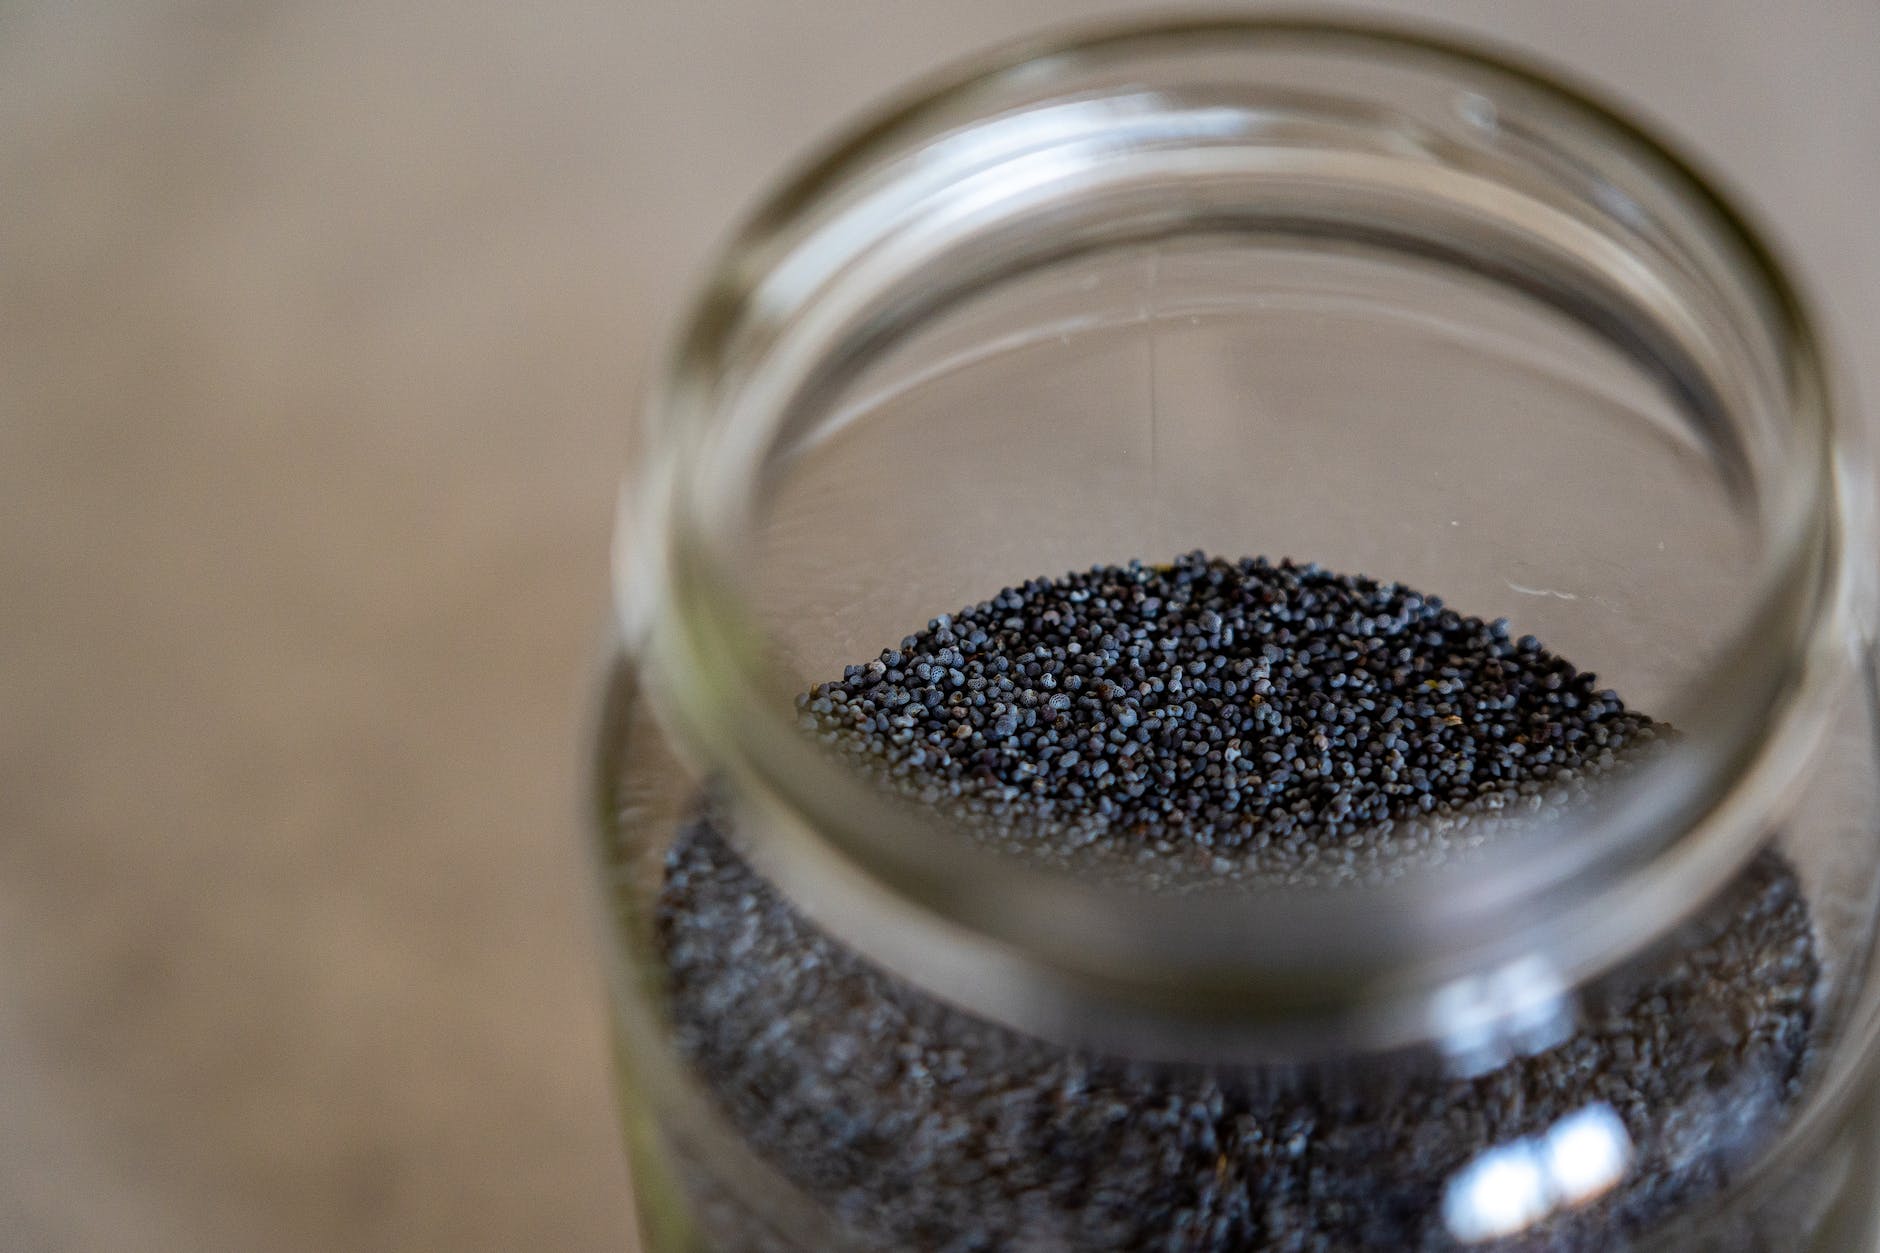 poppy seeds in clear glass jar